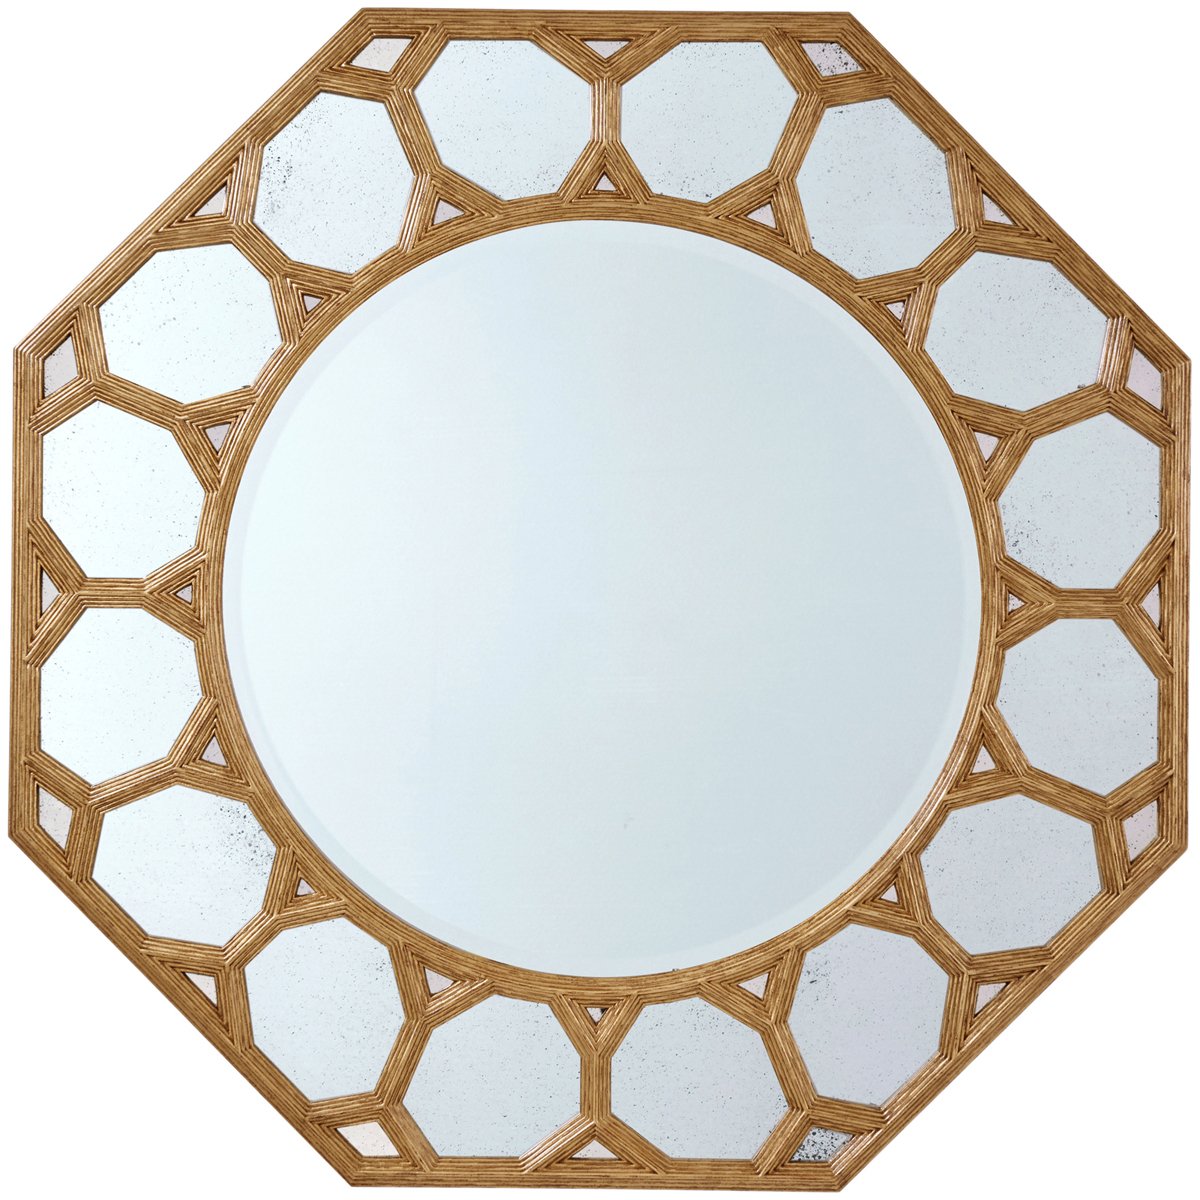 Theodore Alexander Esme Octagonal Wall Mirror